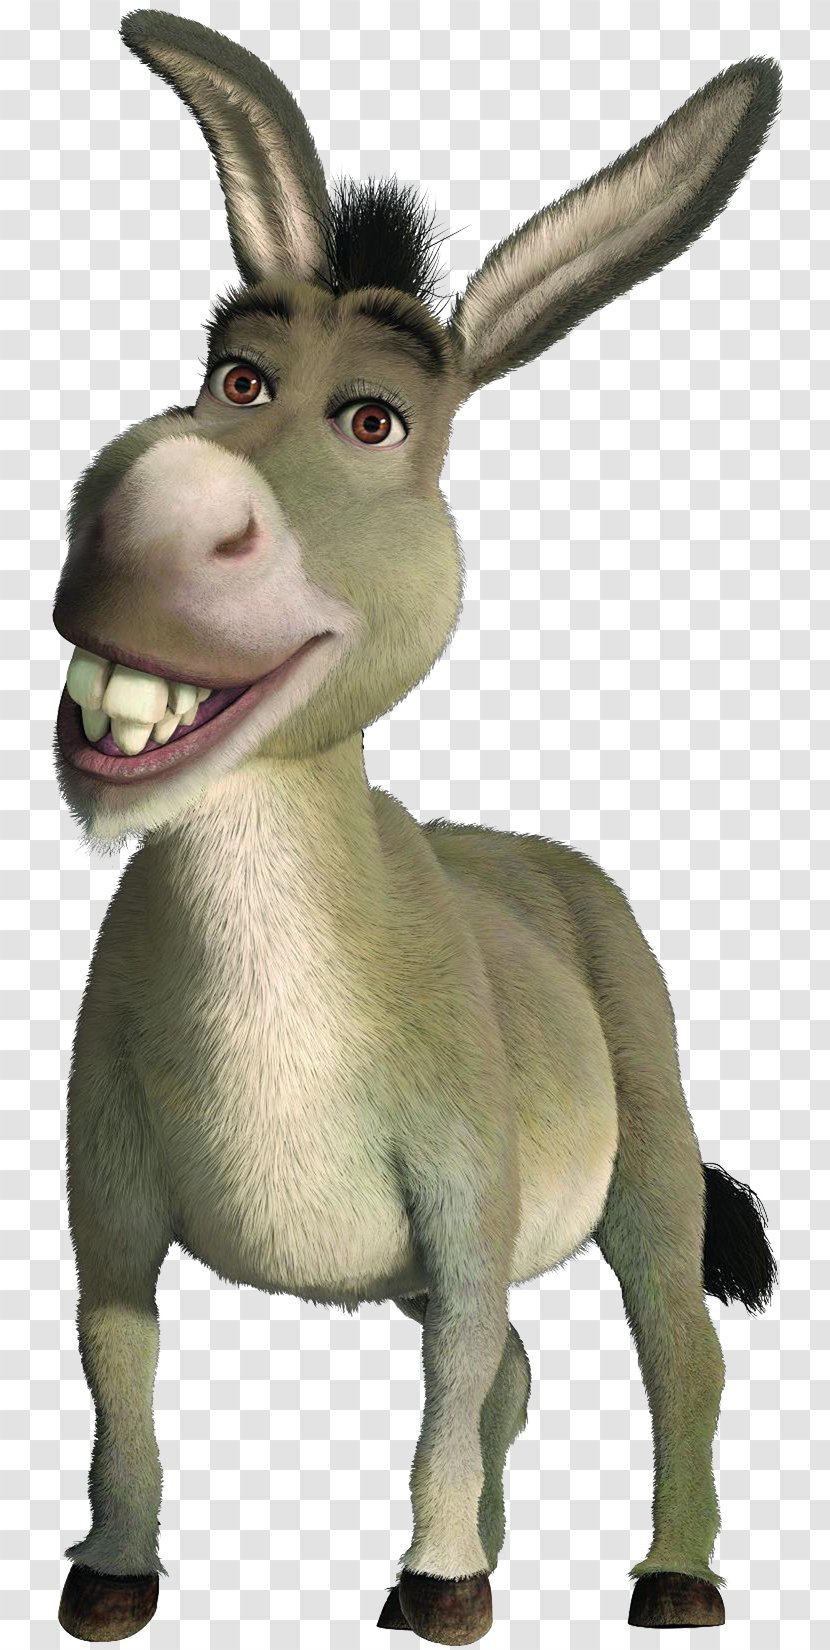 Donkey Princess Fiona Shrek The Musical Film Series - Goats Transparent PNG